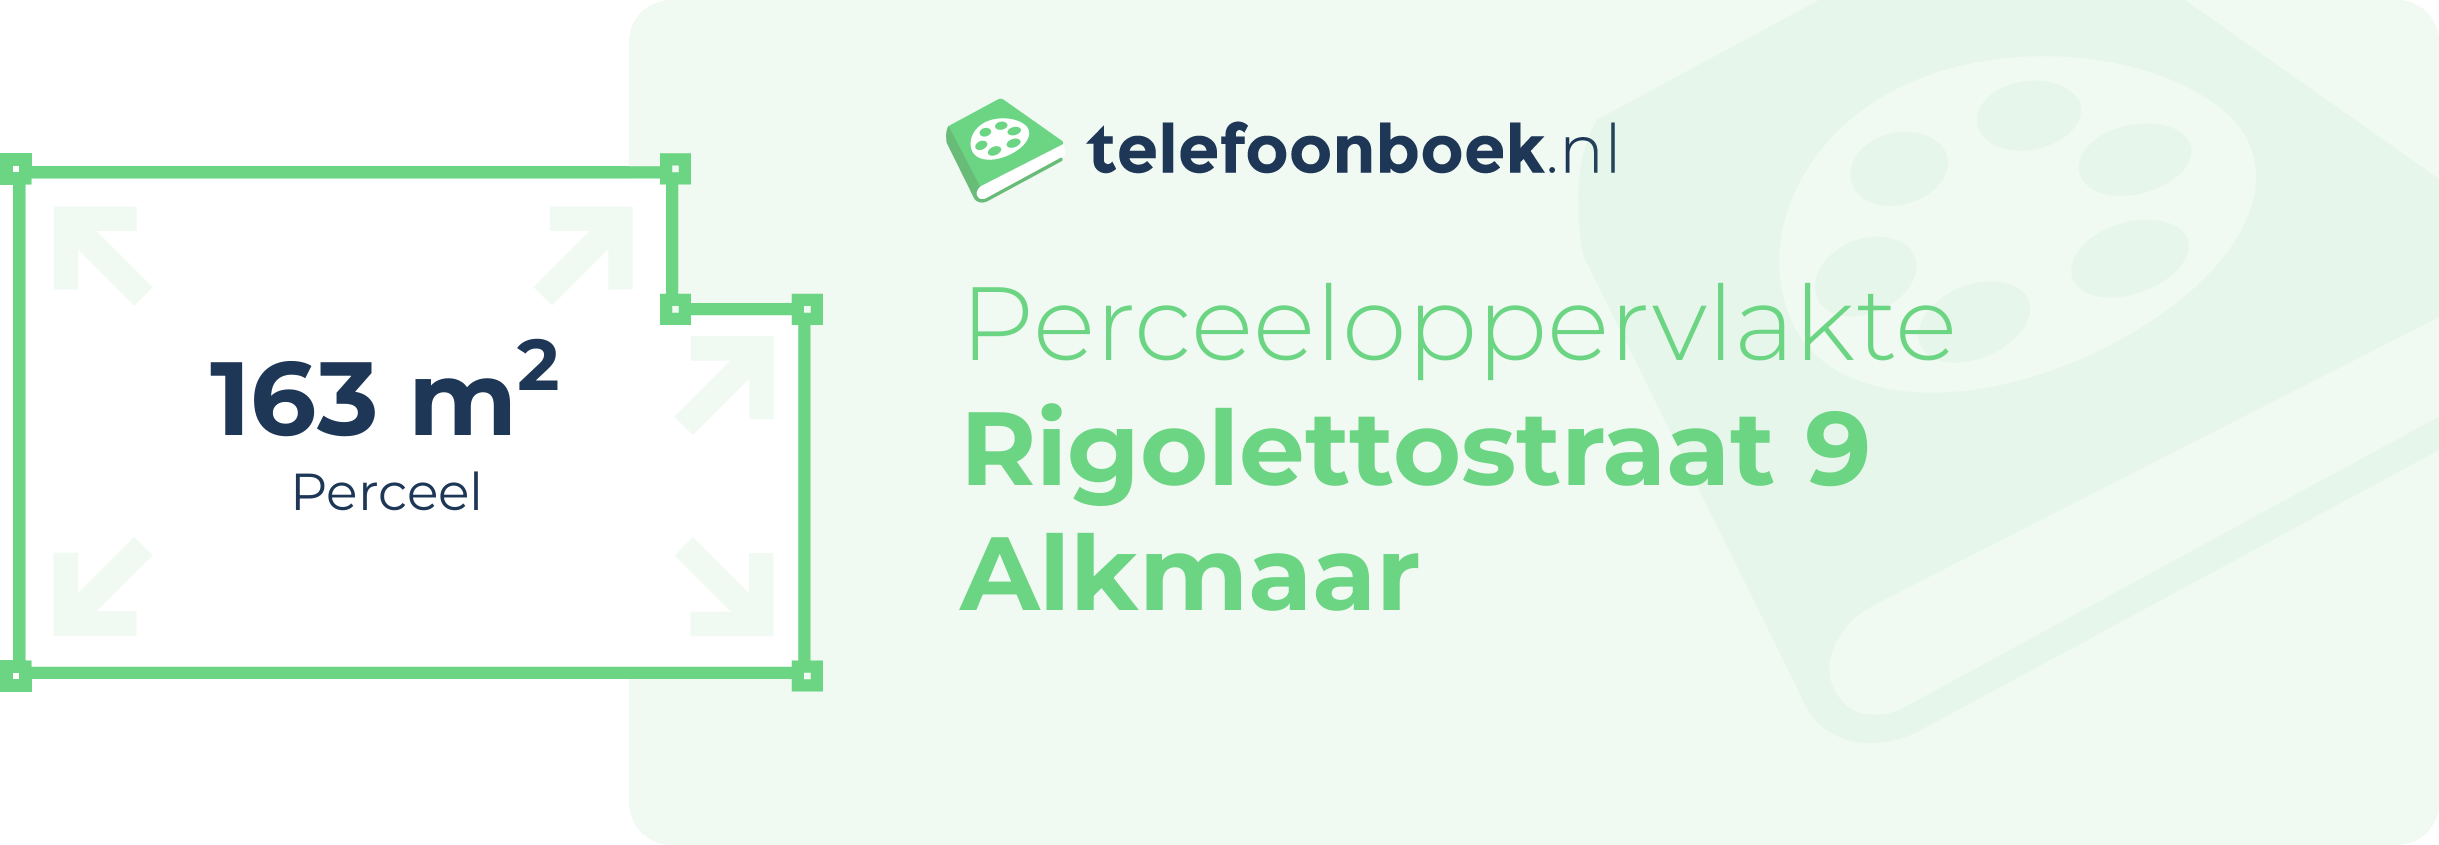 Perceeloppervlakte Rigolettostraat 9 Alkmaar